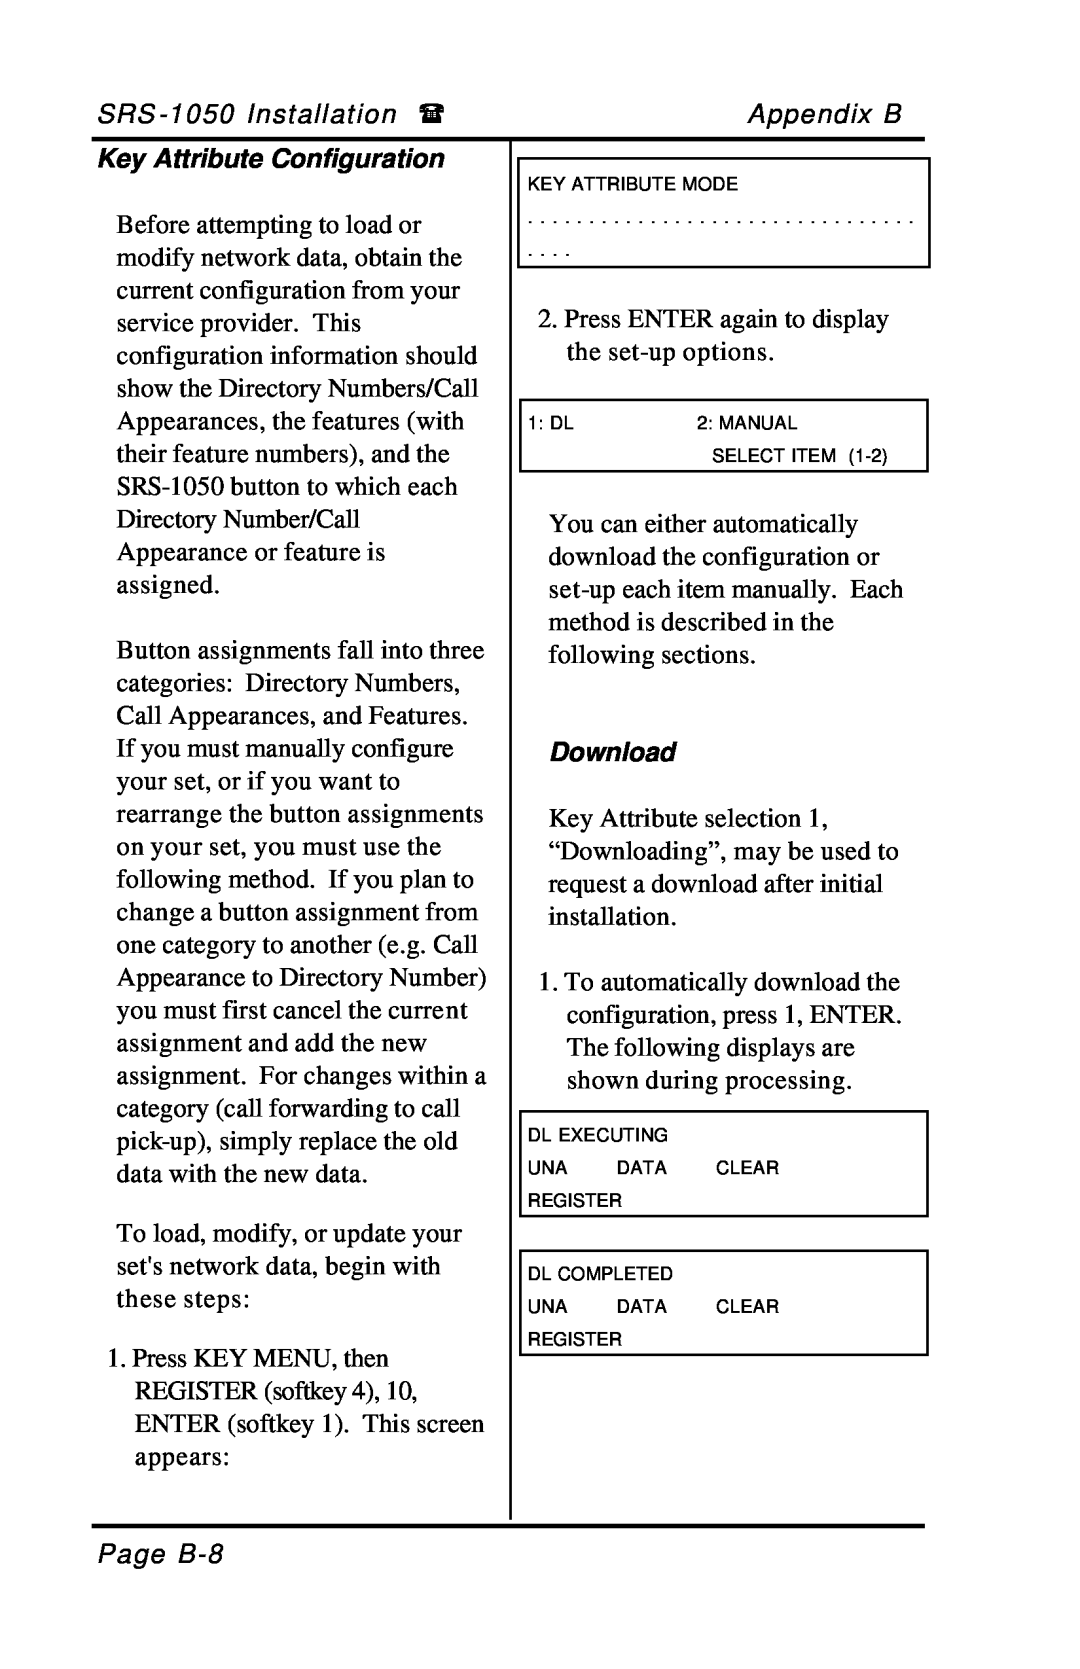 Fujitsu SRS-1050 manual Key Attribute Configuration, Download 